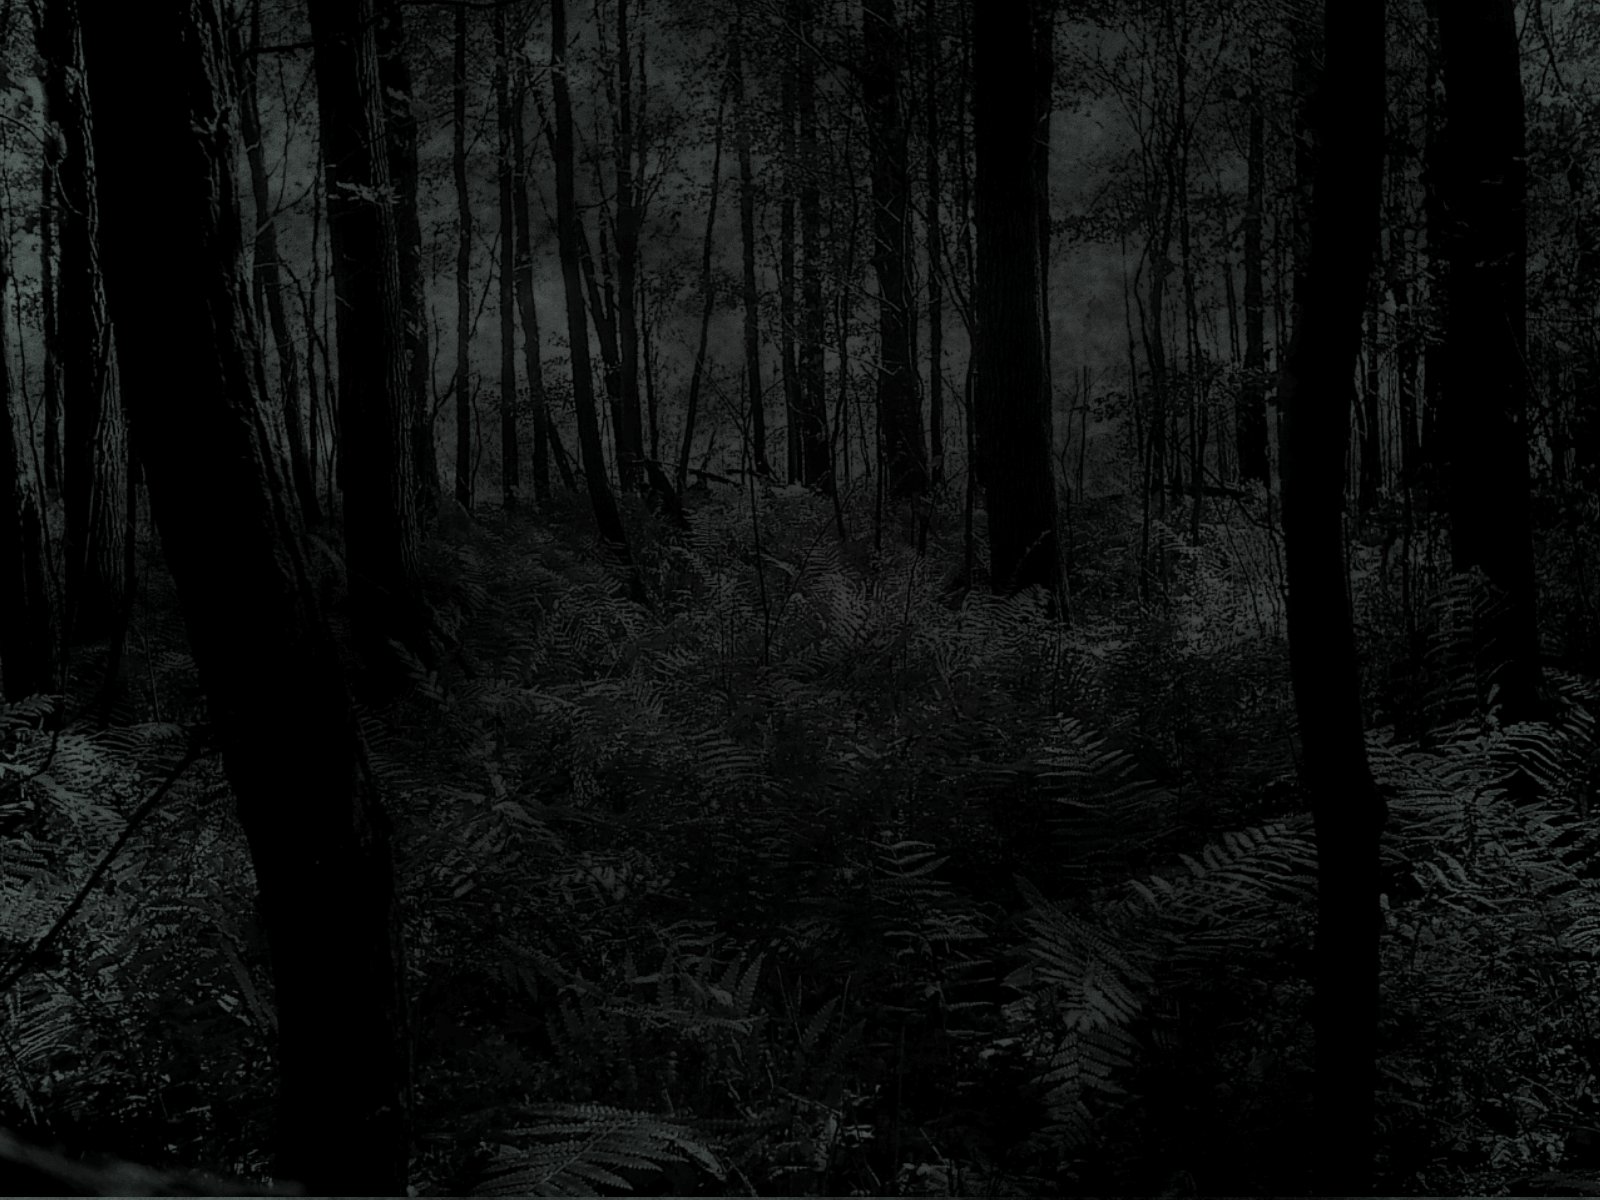 http://www.depesz.com/wp-content/uploads/2007/02/wallpapers/dark.forest.jpg